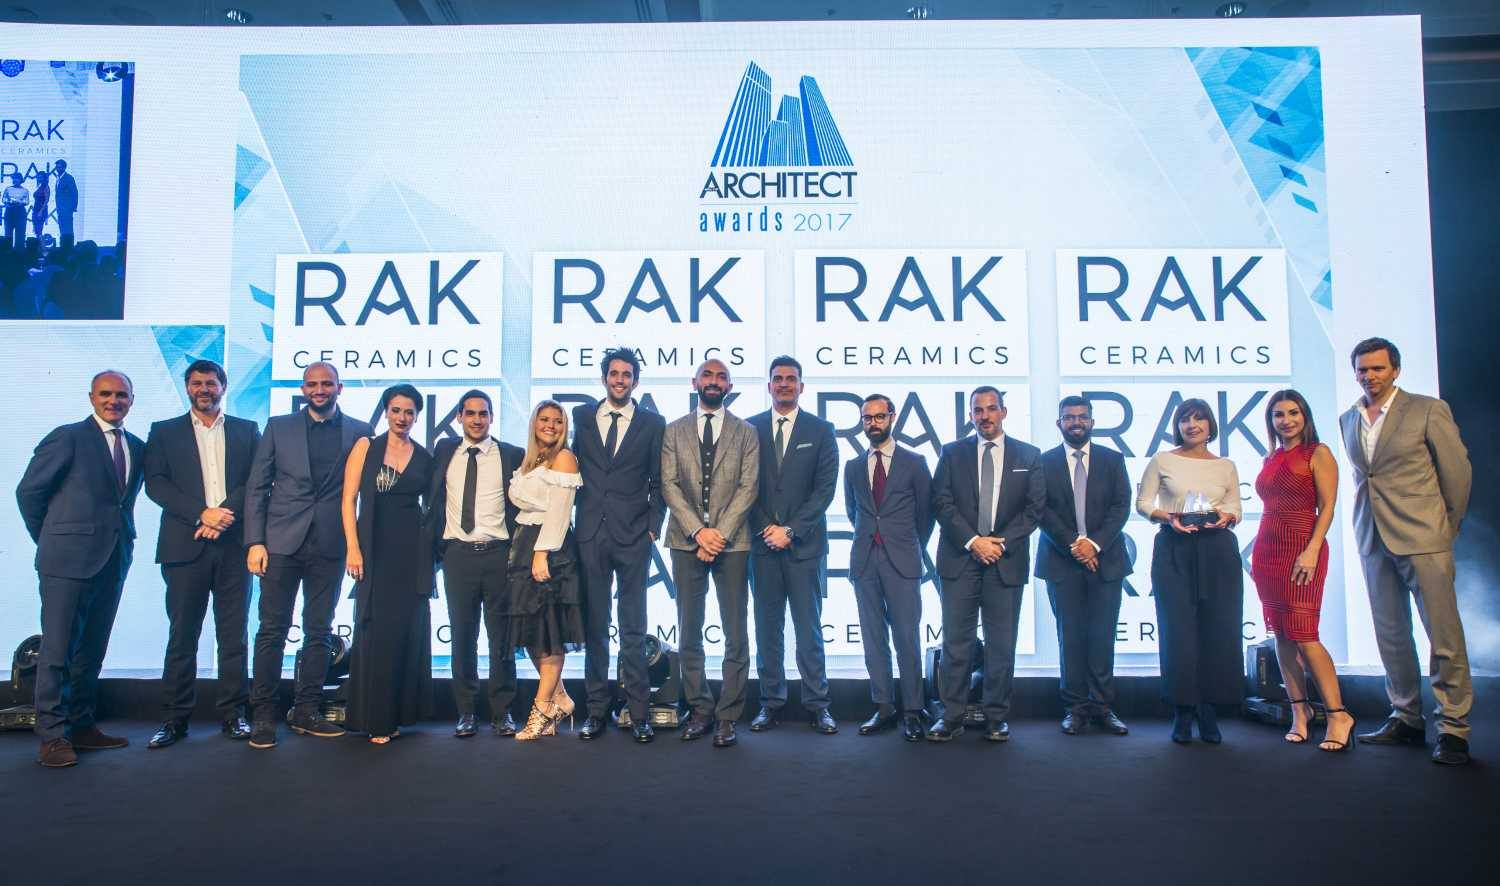 RAK Ceramics sponsors  the 10th Middle East Architect Awards